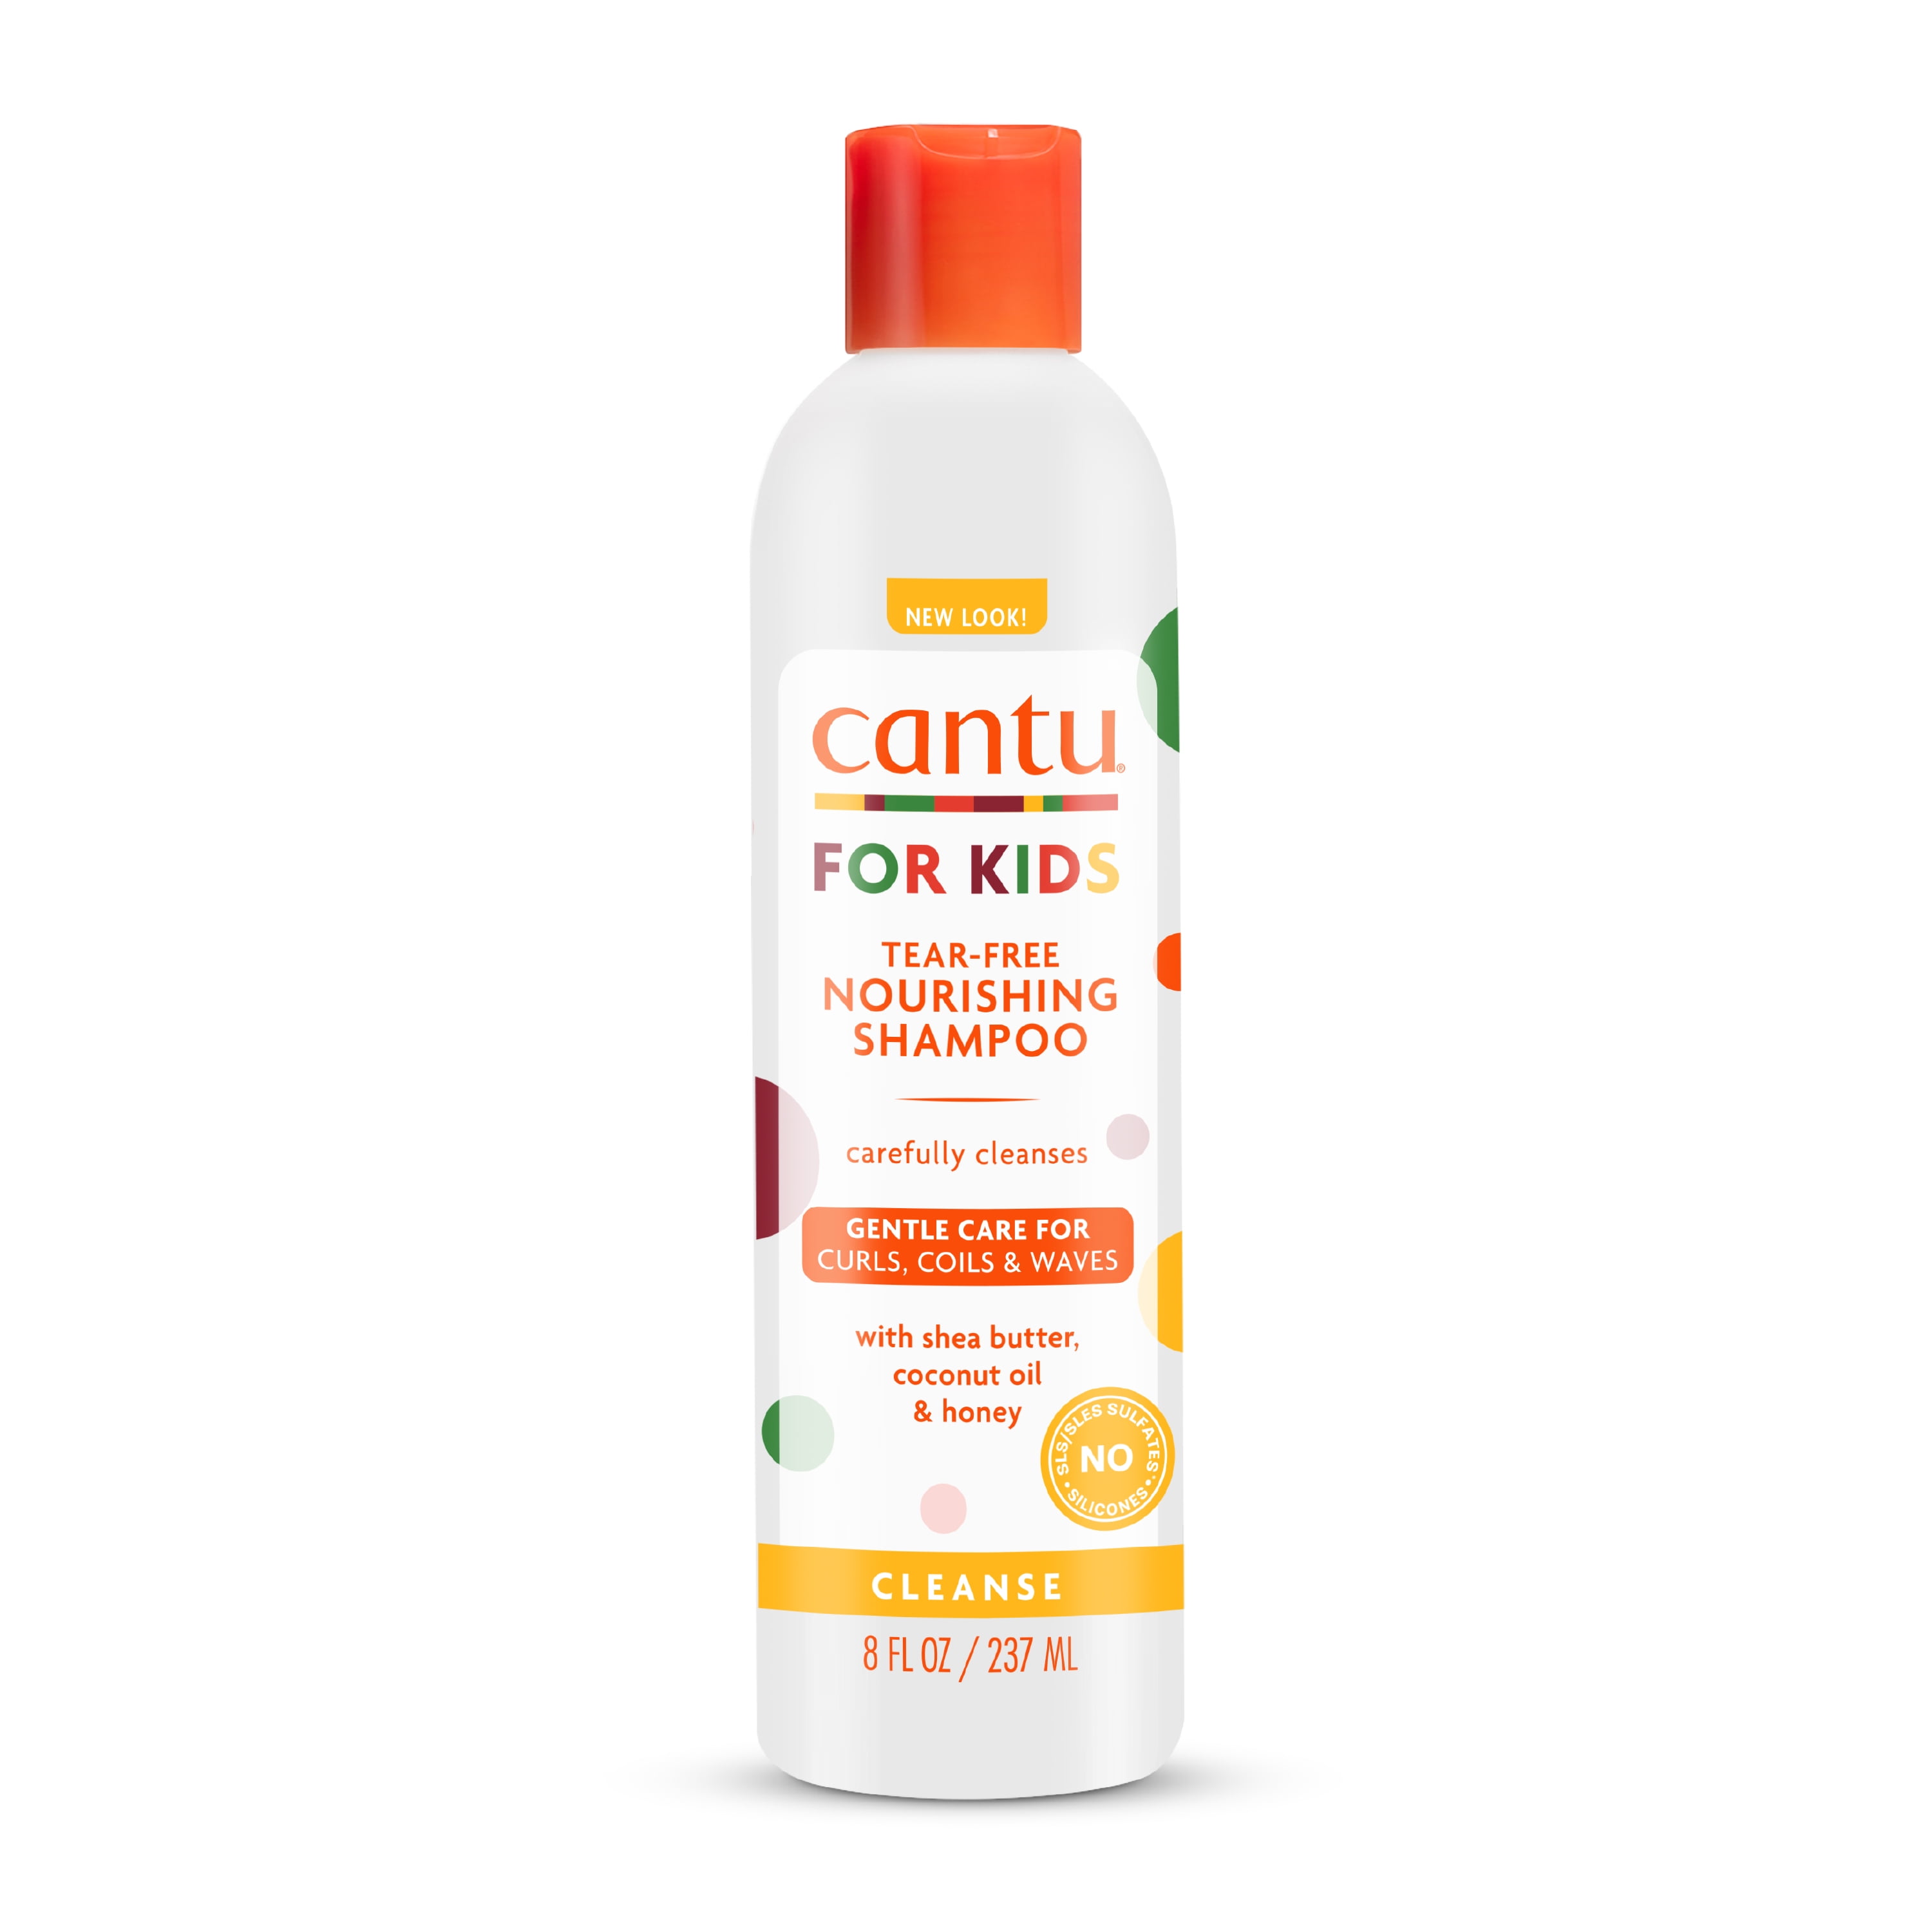 Cantu Care for Kids Tear-Free Nourishing Shampoo with Shea Butter, 8 fl oz